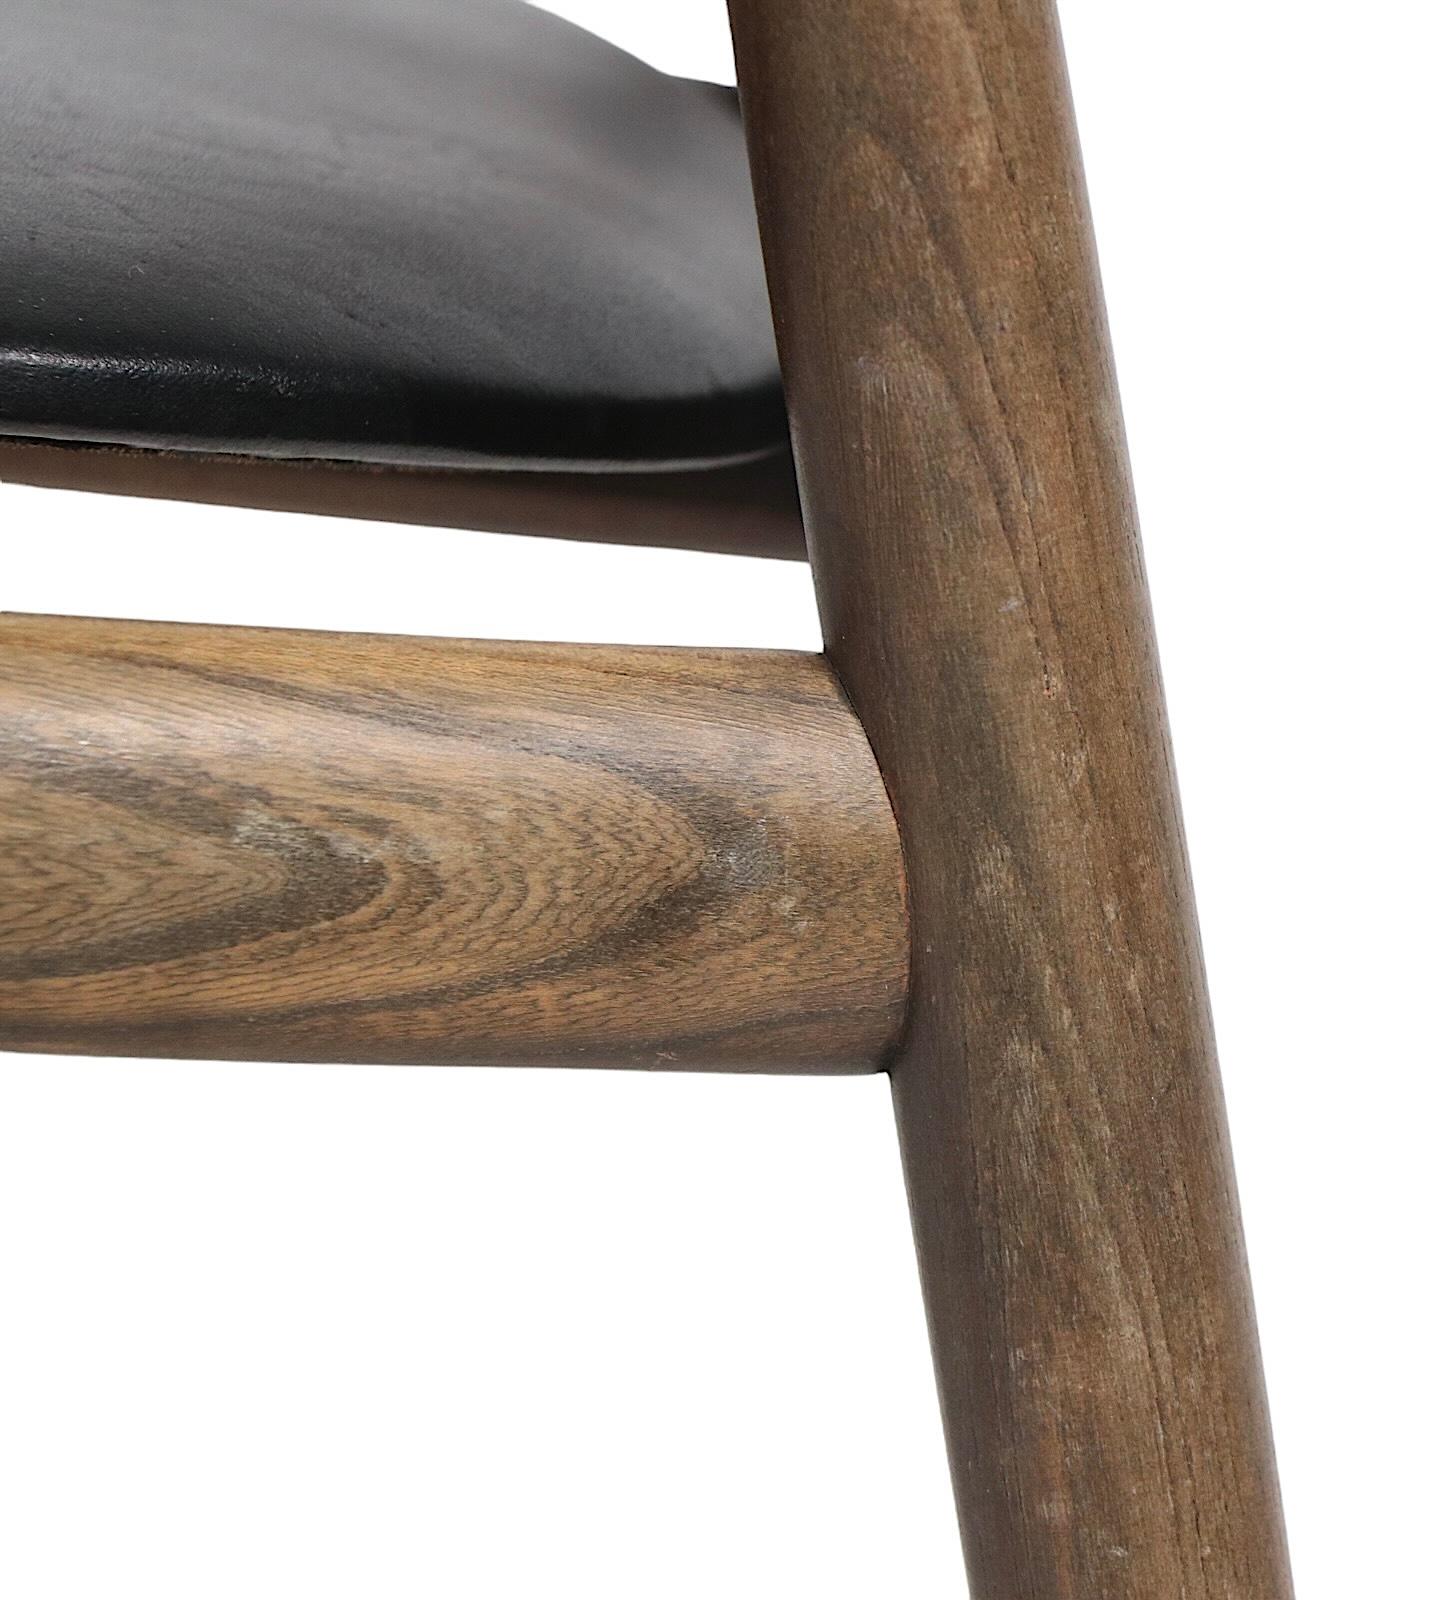  Pr. Illum Wikkelso Design Niels Eilersen Made Danish Mid Century  Dining Chairs For Sale 2